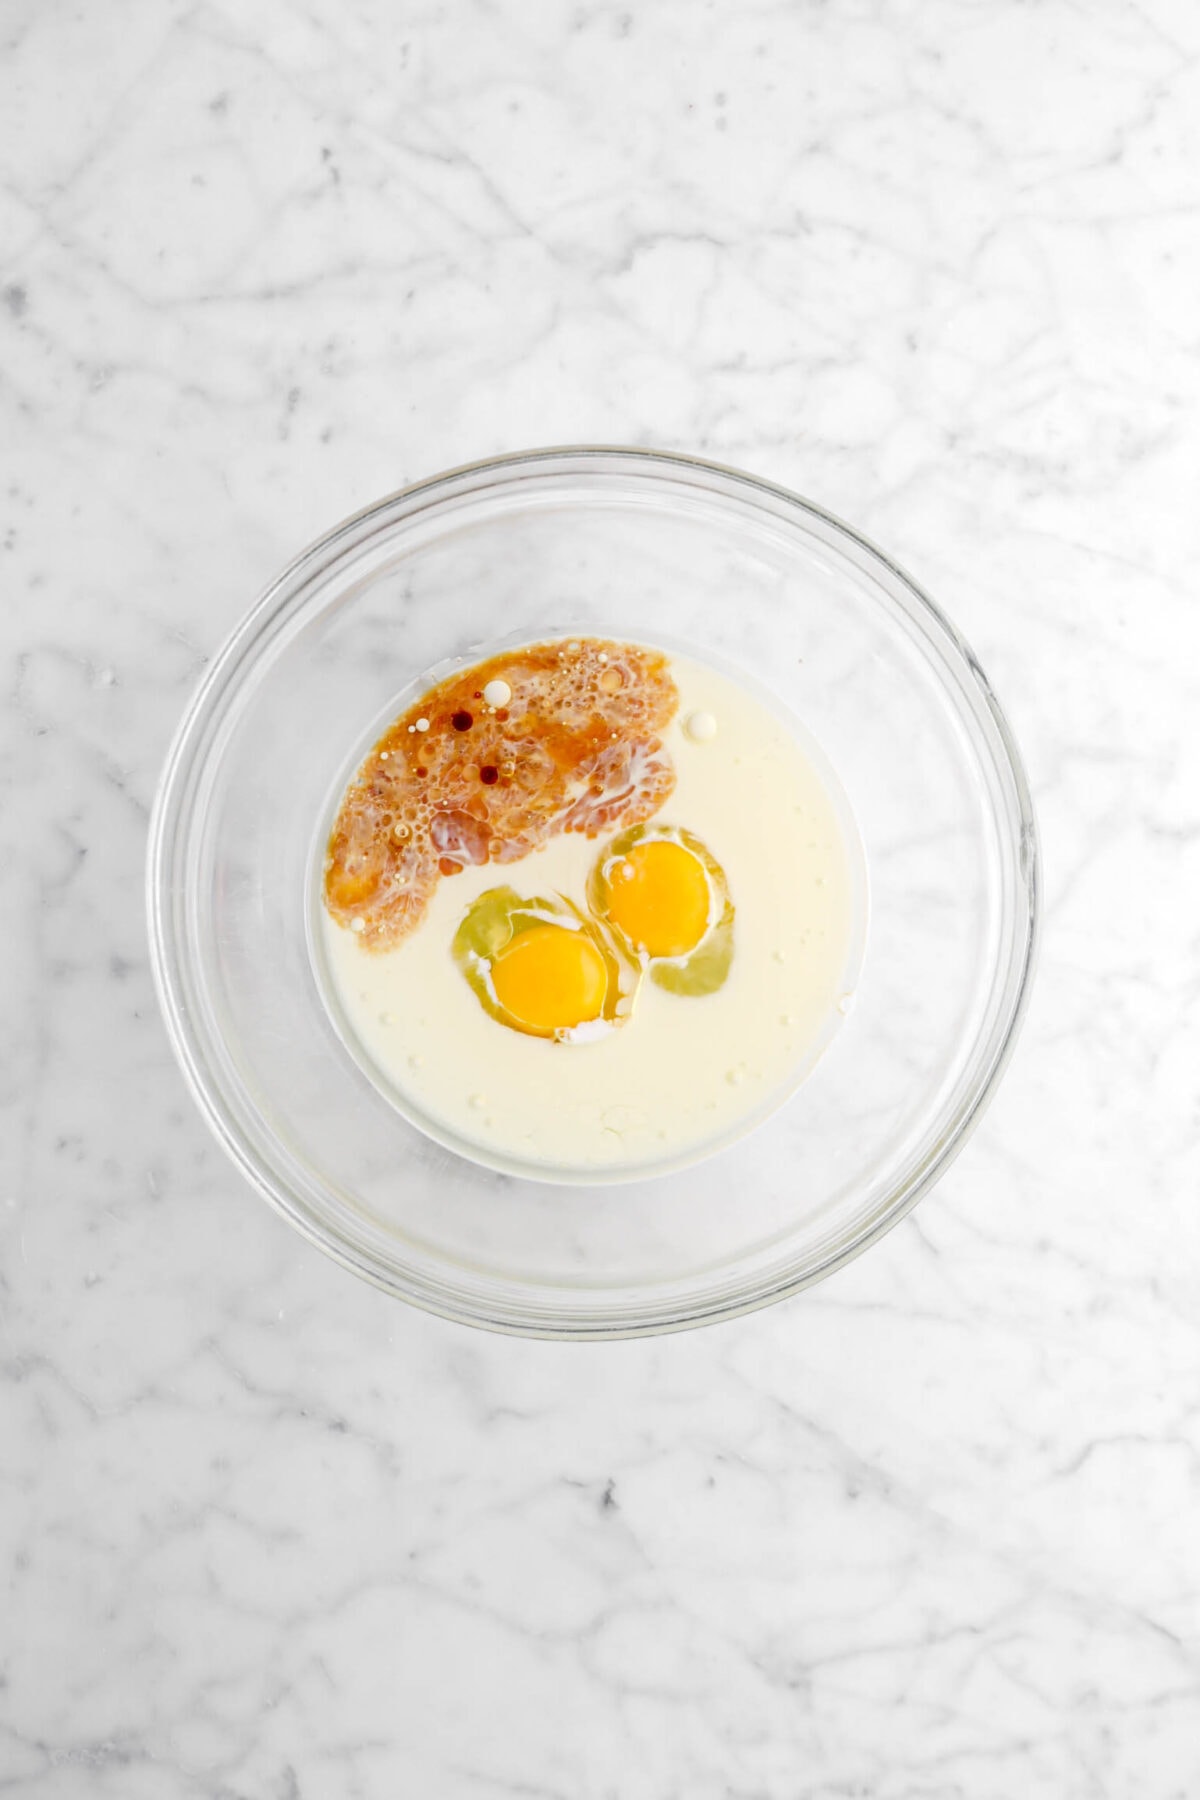 vanilla, vegetable oil, milk, and eggs in glass bowl